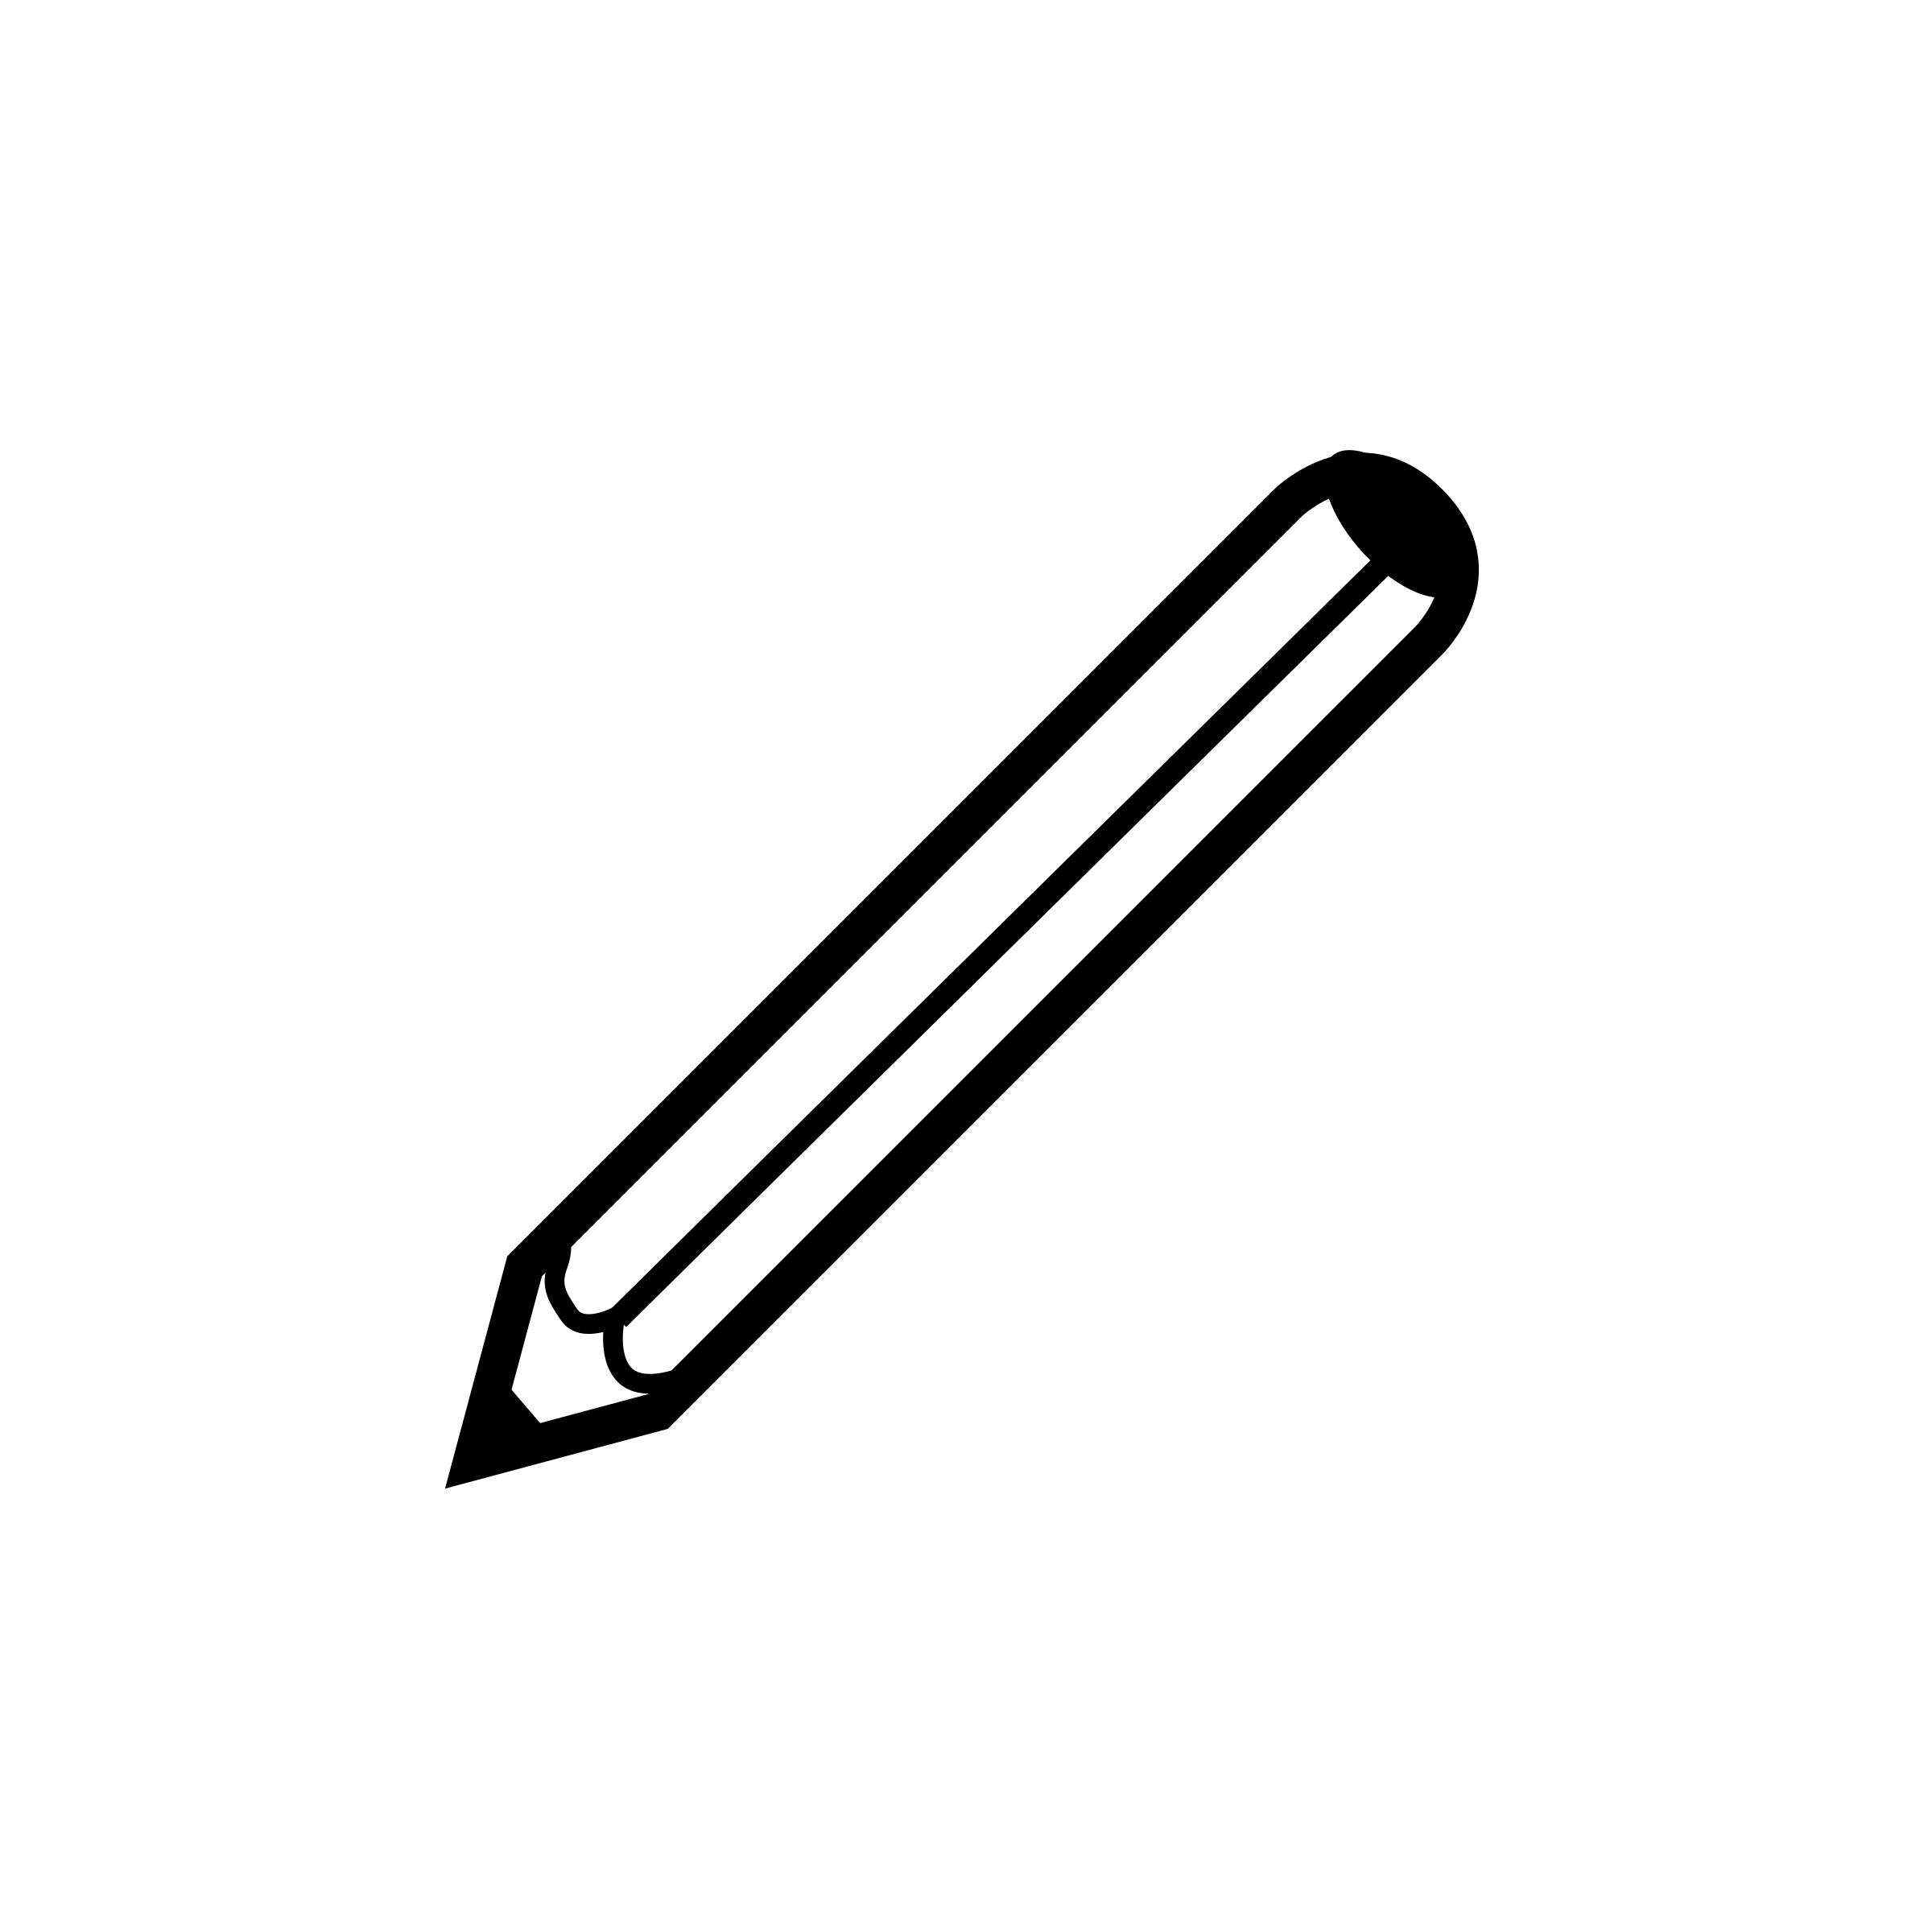 Pencil icon png